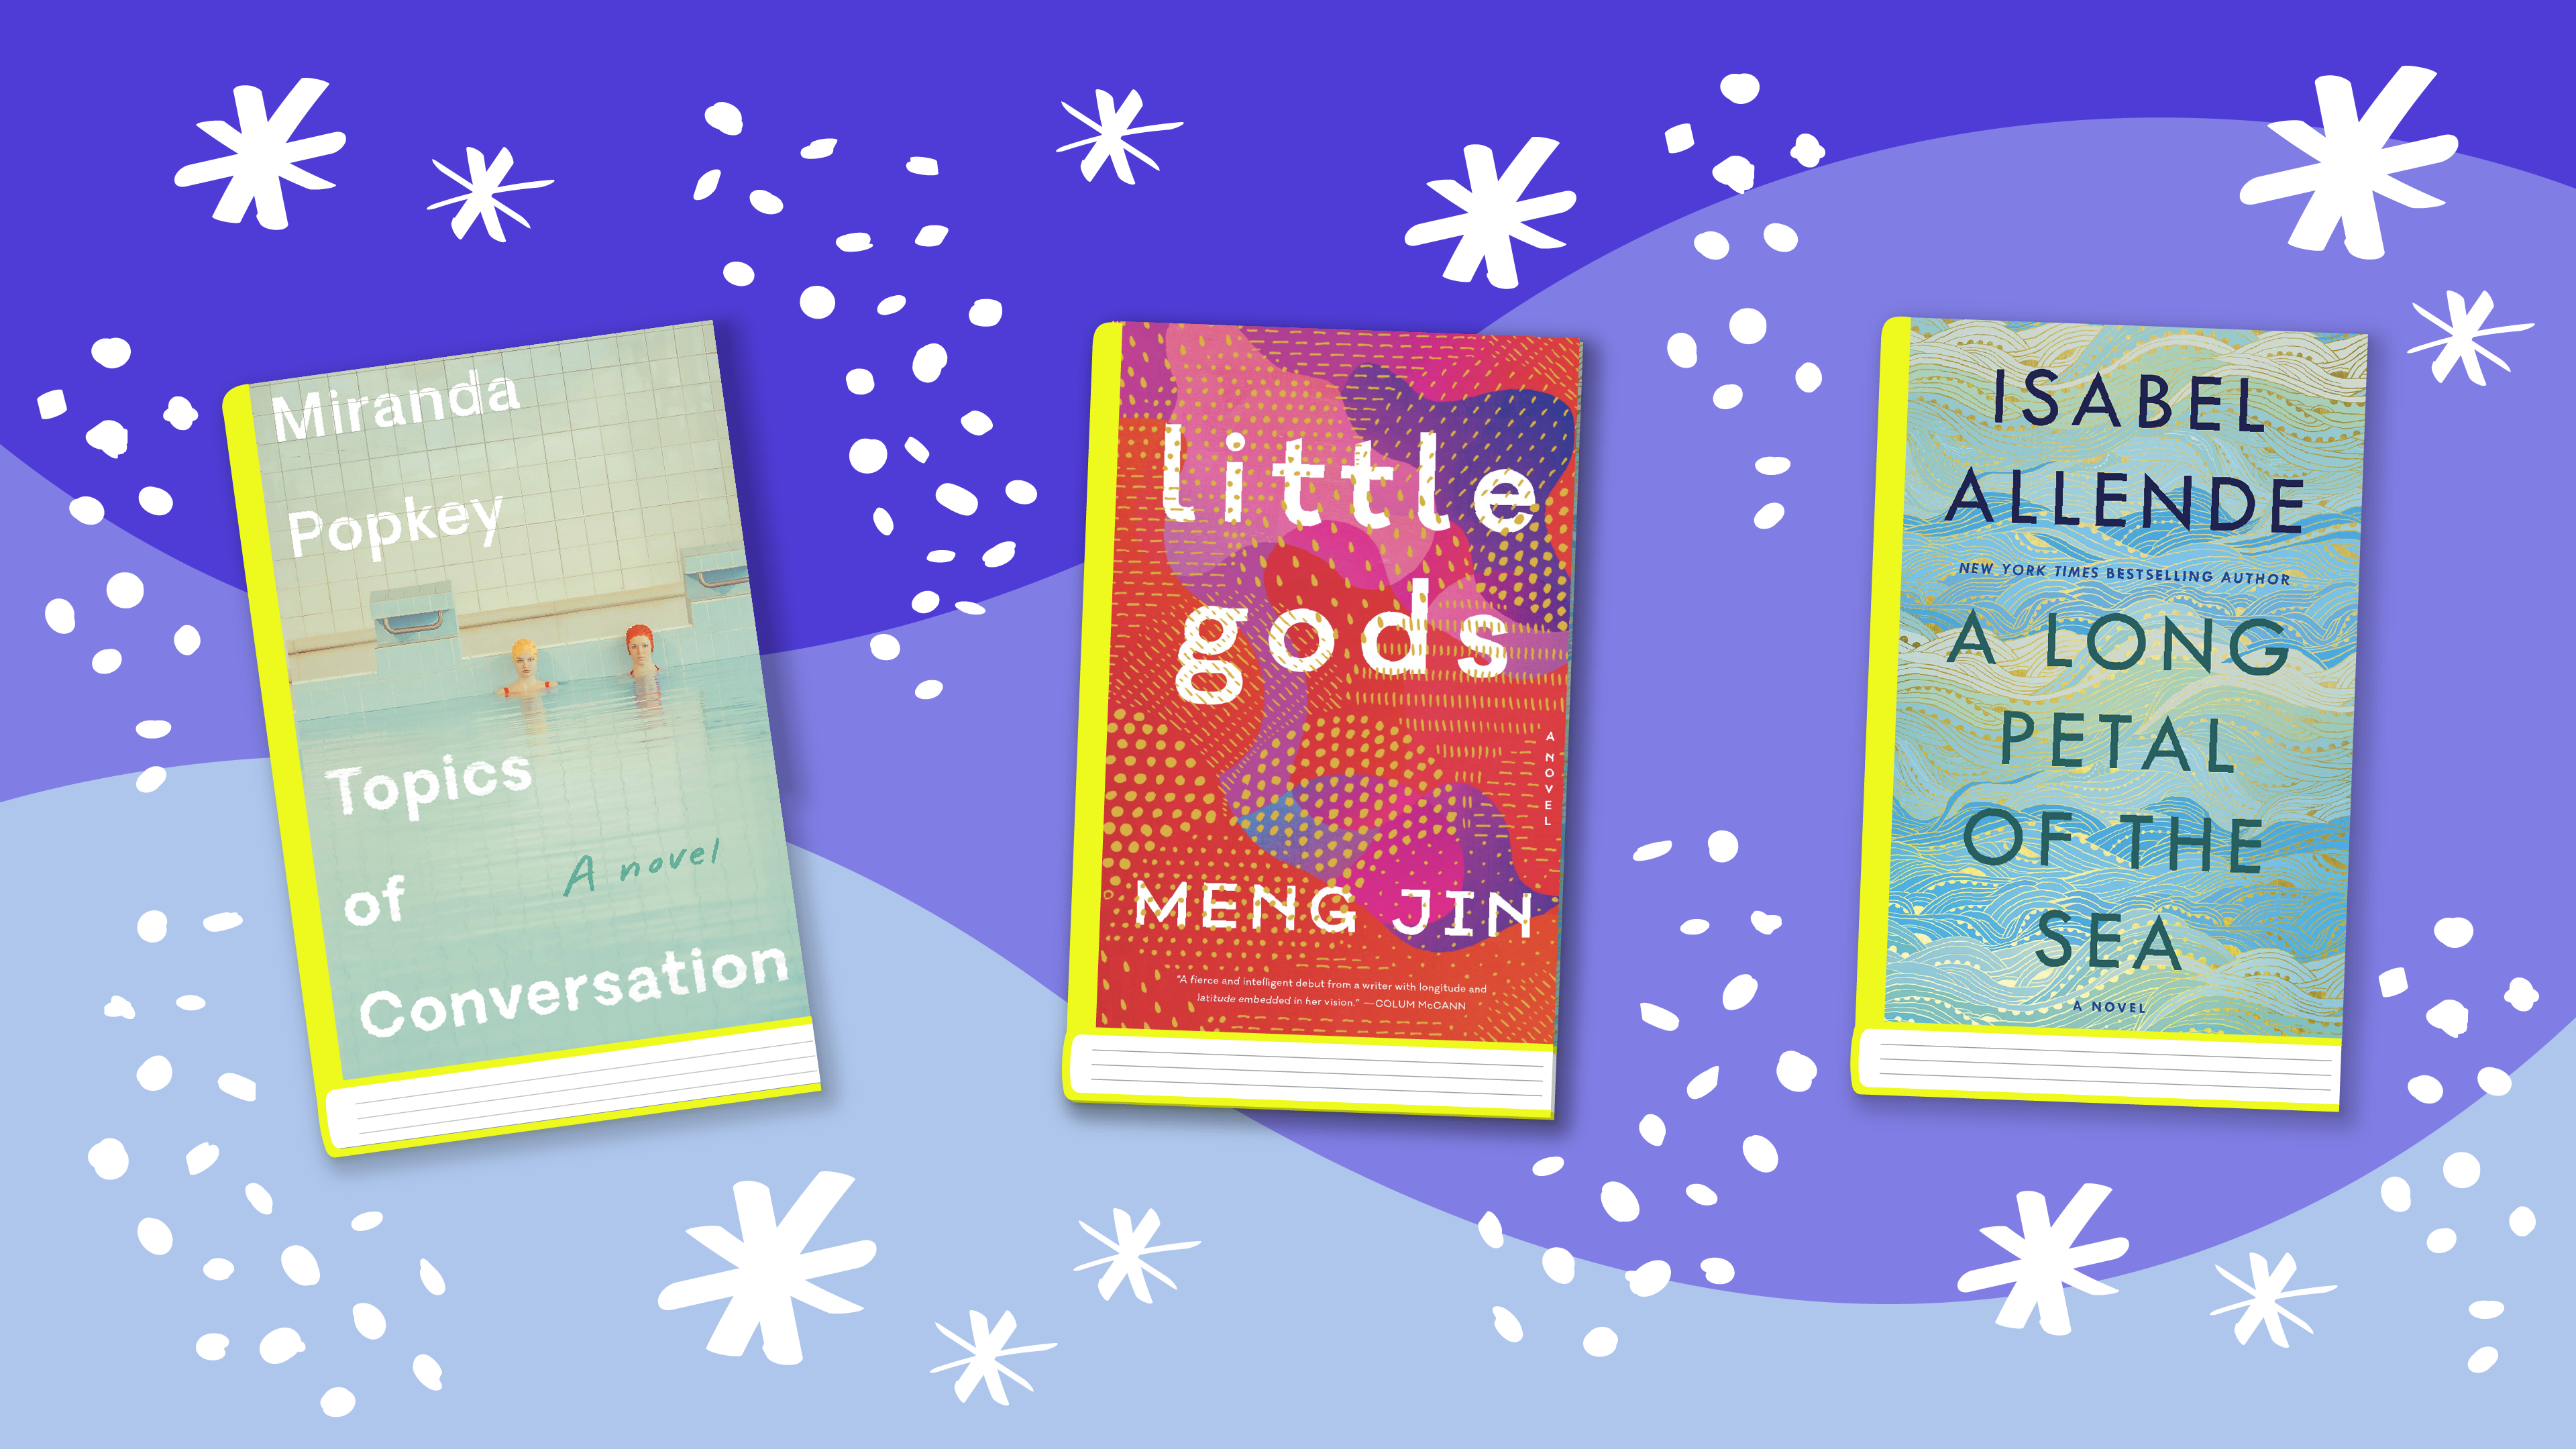 Miranda Popkey's "Topics of Conversation," Meng Jin's "Little Gods," and Isabel Allende's "A Long Petal of the Sea"